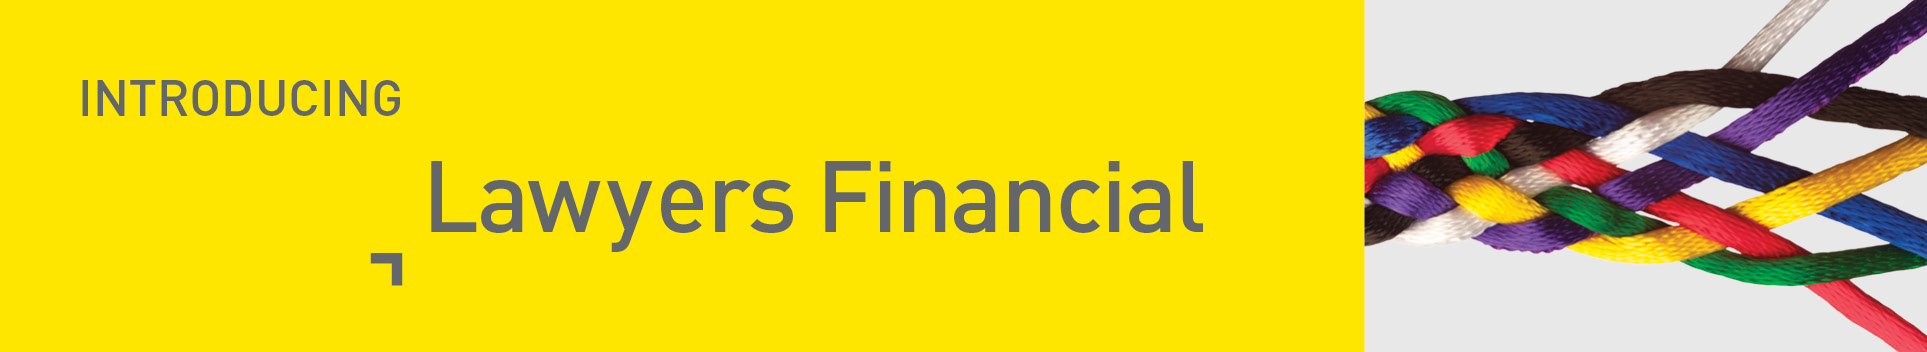 Introducing Lawyers Financial logo